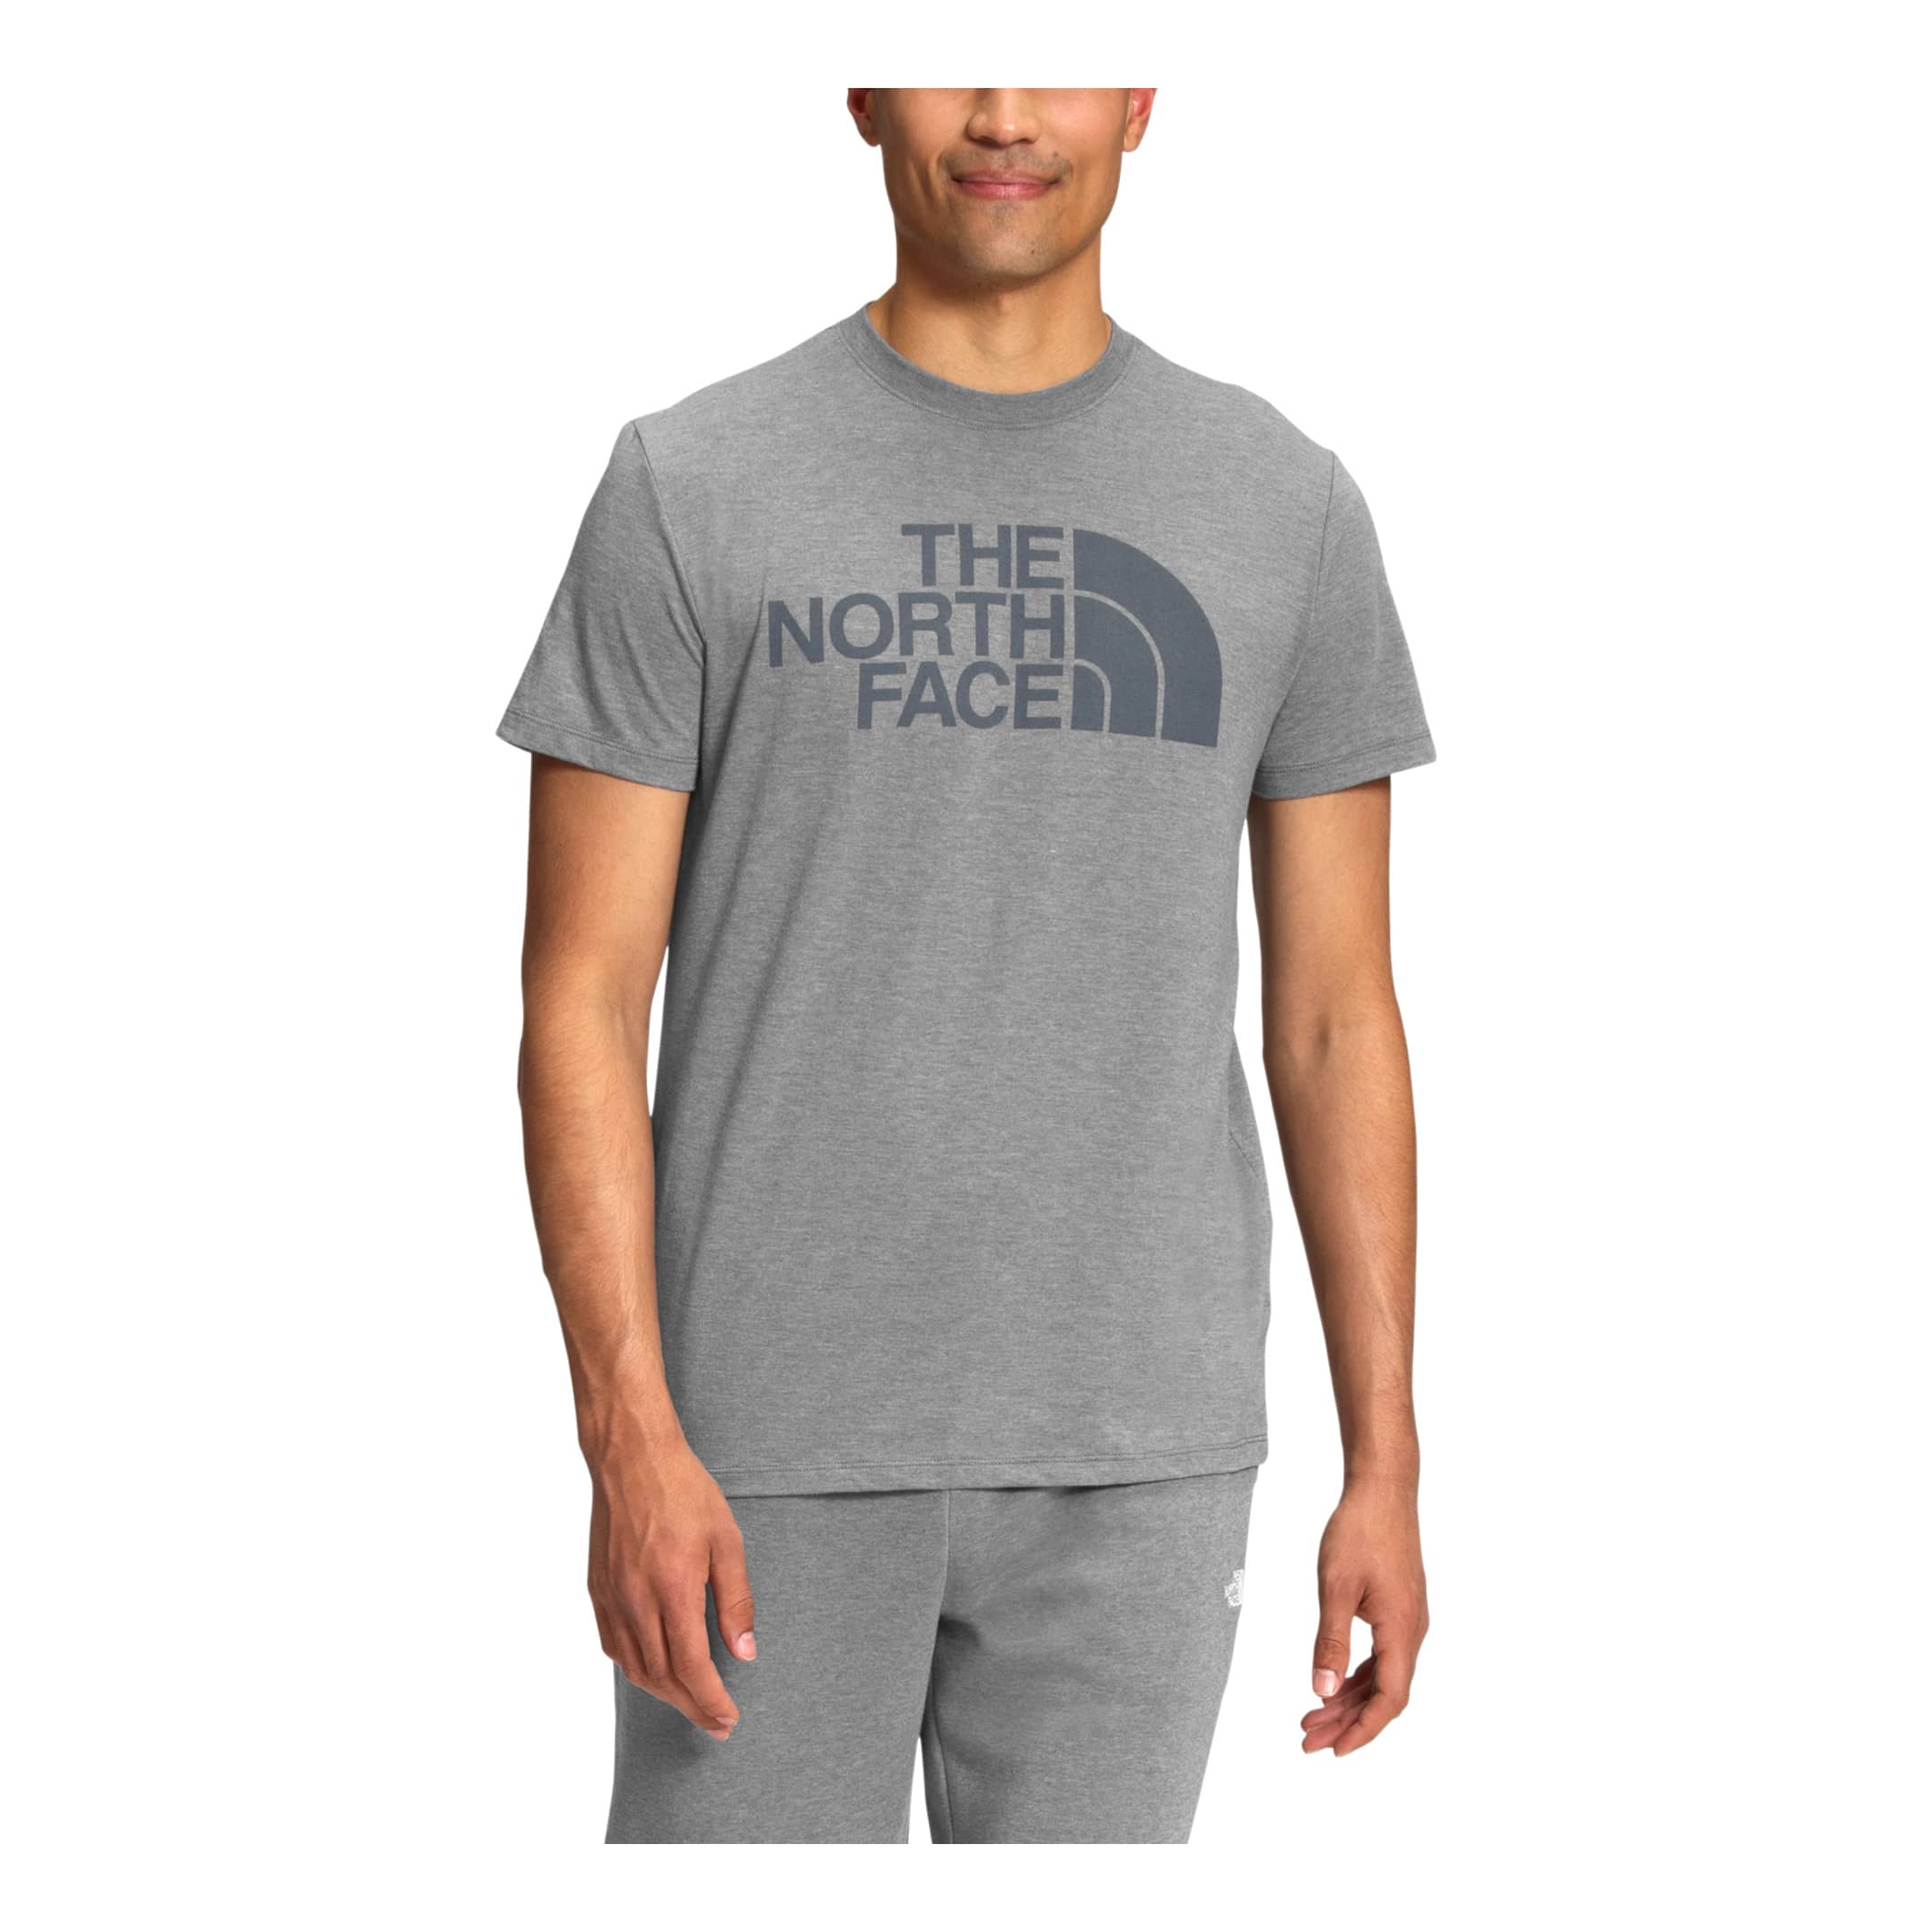 The North Face® Men’s Half Dome Tri-Blend Short-Sleeve T-Shirt - Medium Grey Heather